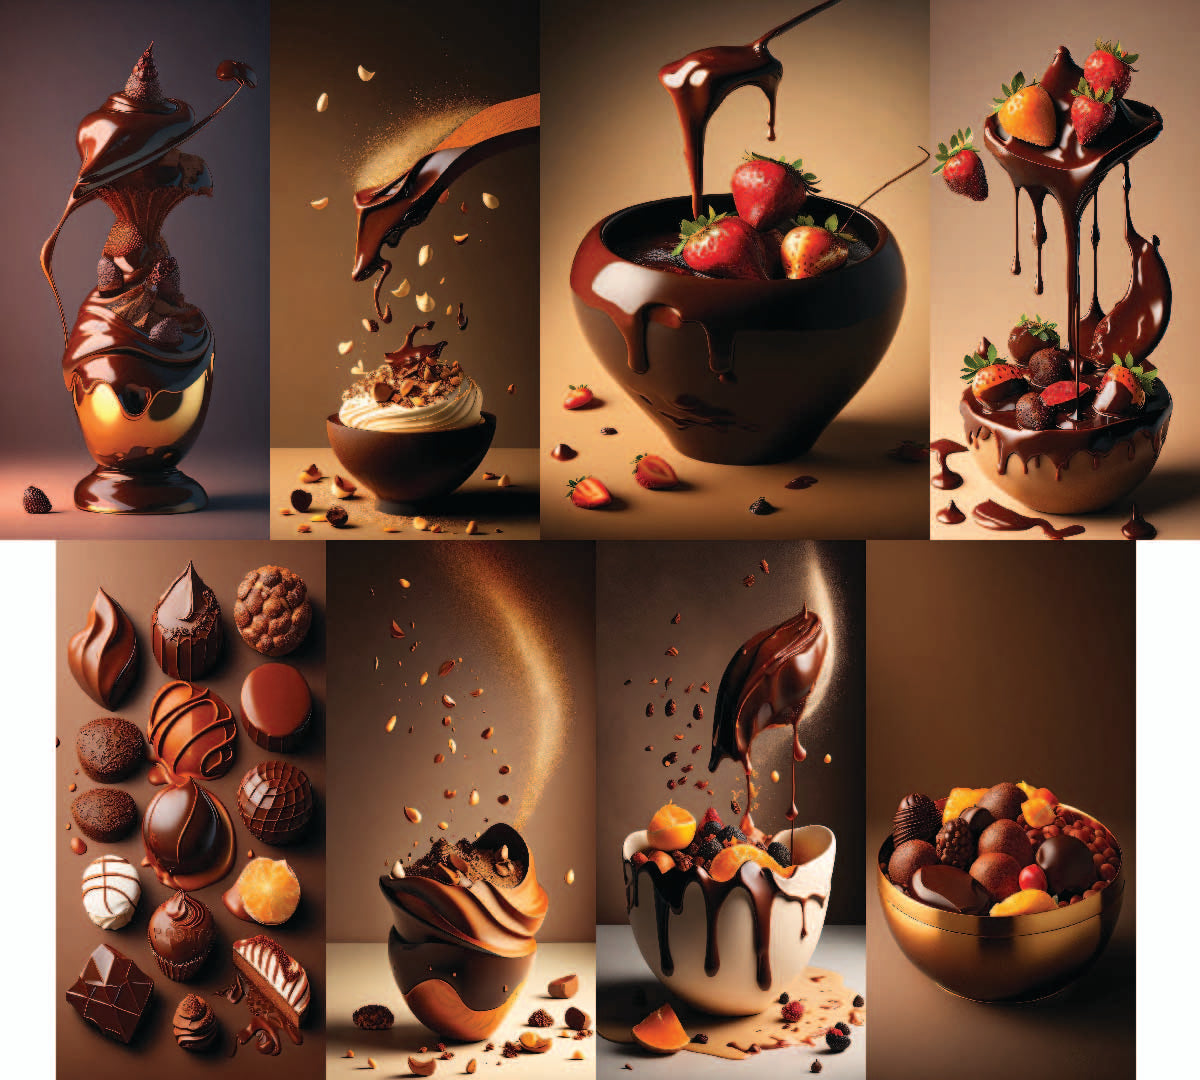 83 Pieces "Chocolate and Cakes" Restaurant Special Art Design